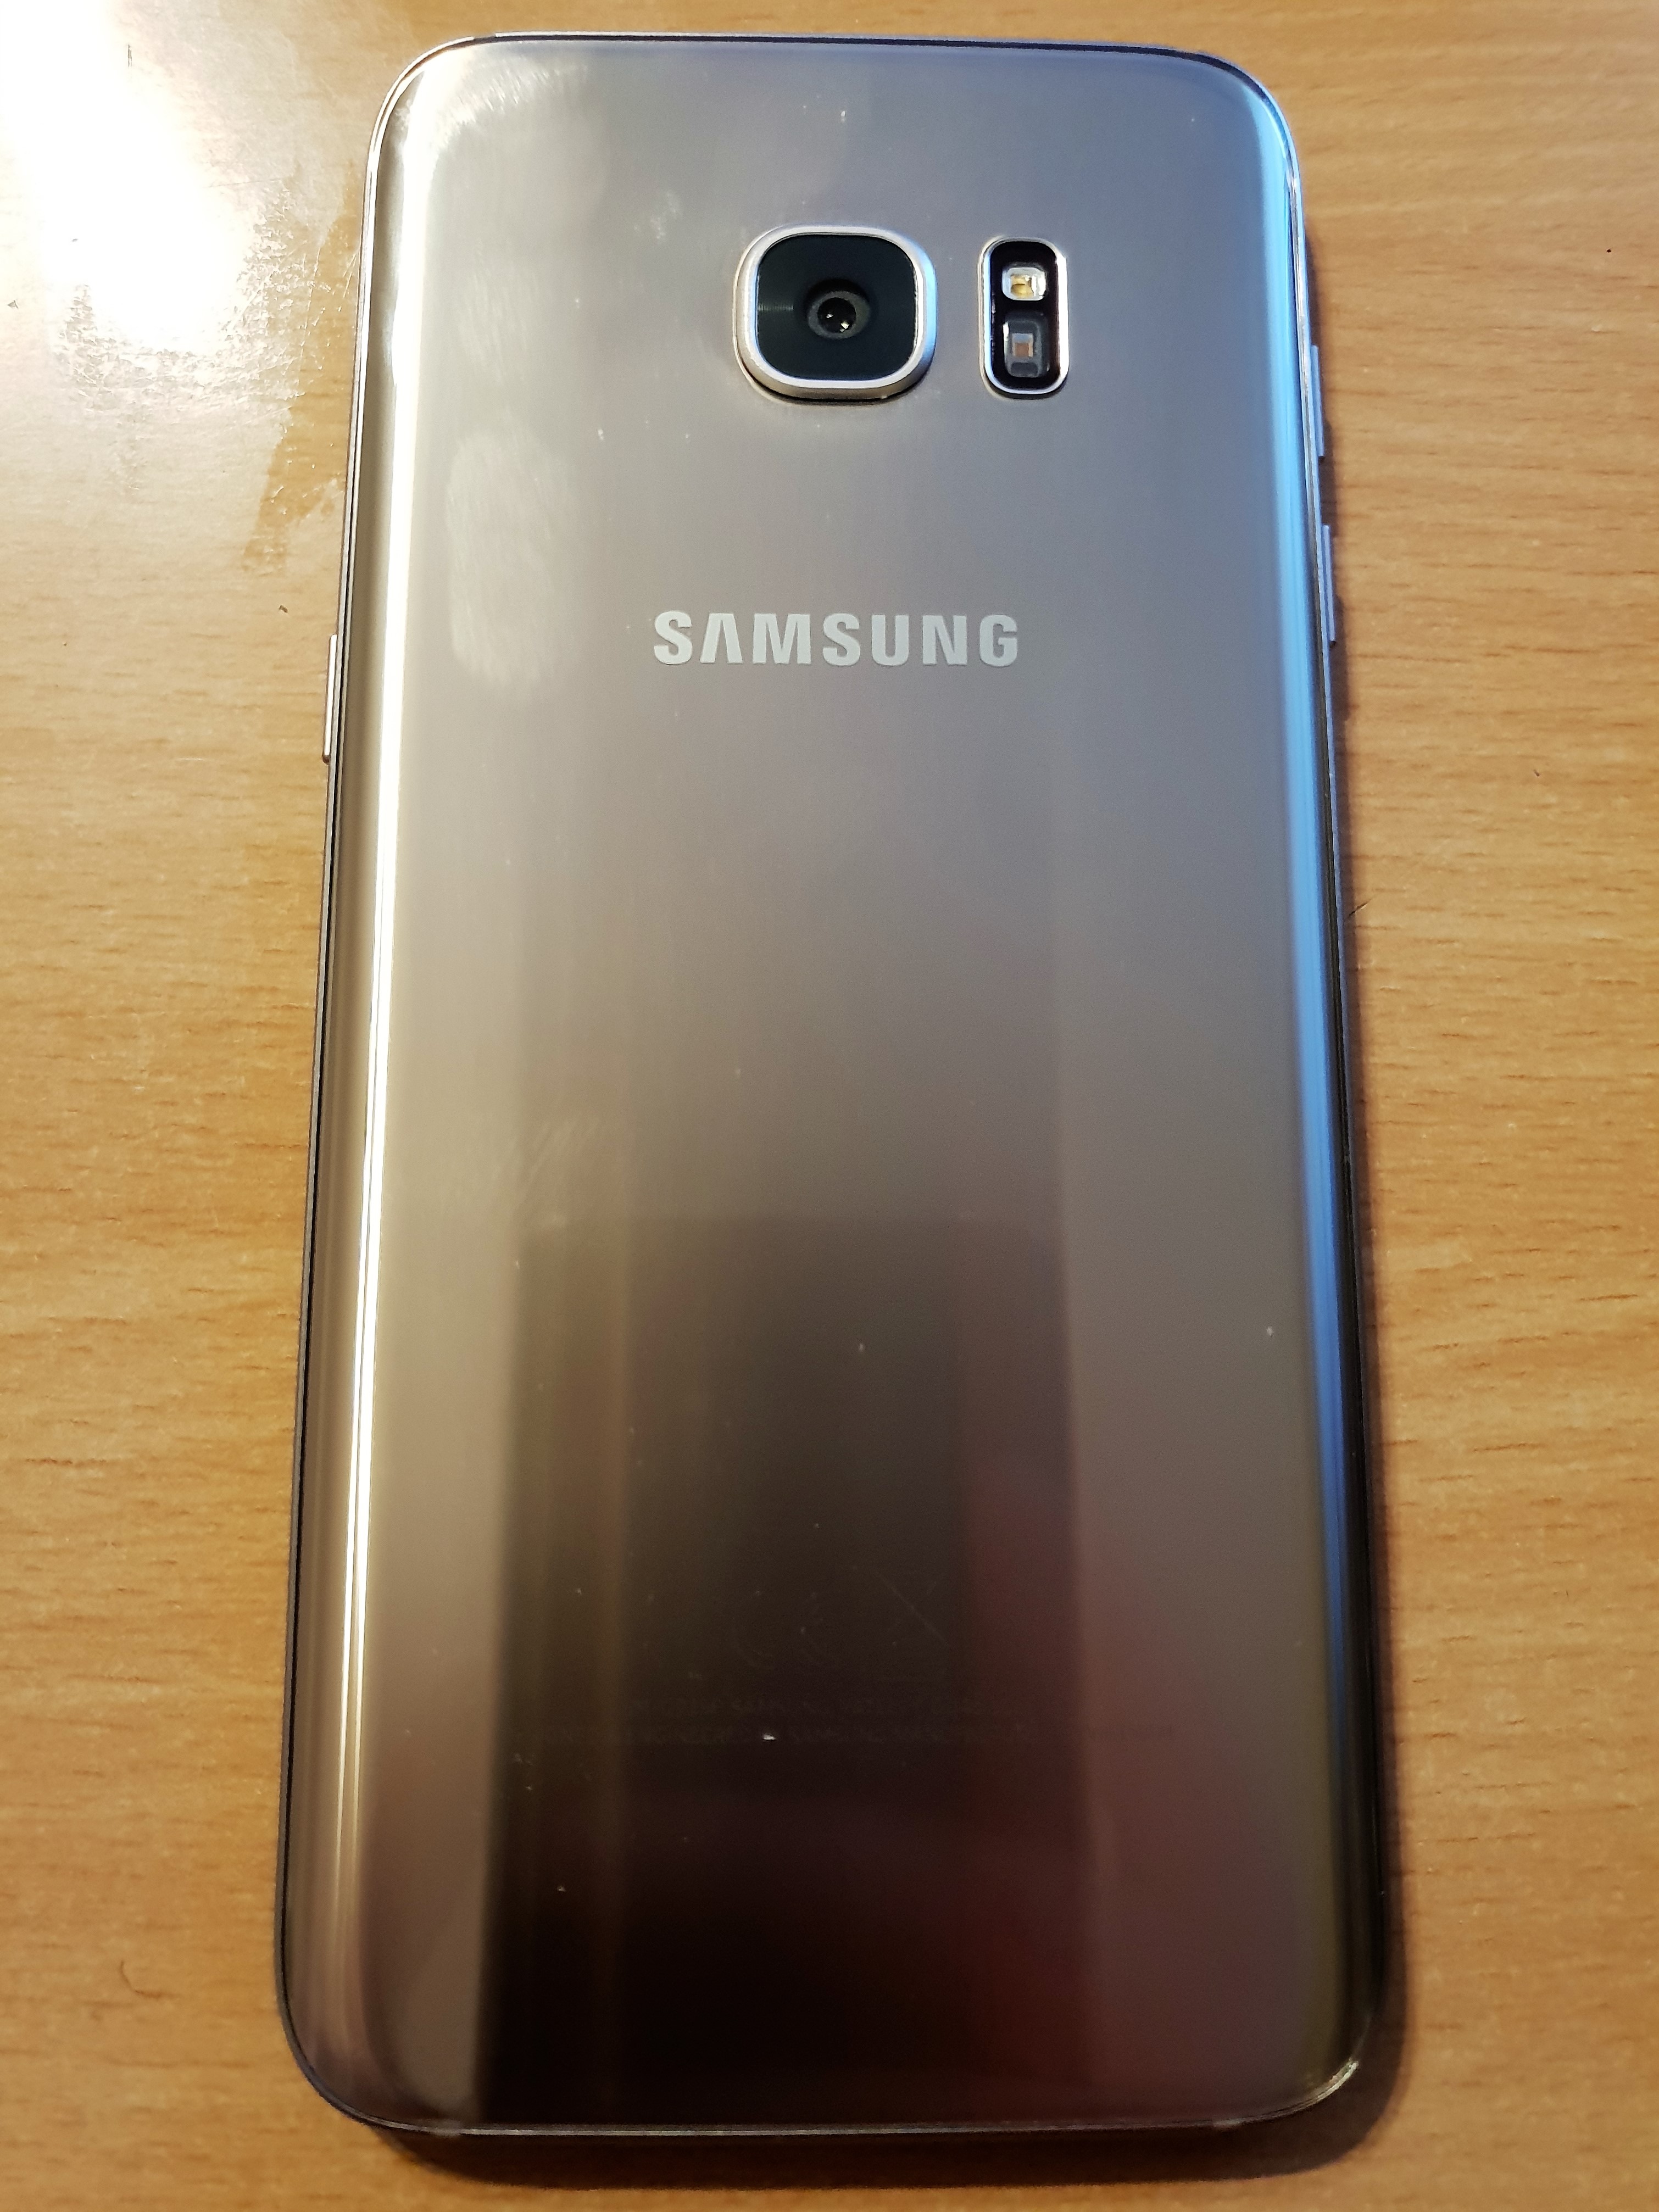 Samsung Galaxy S7 EDGE - 32GB Gold - Back